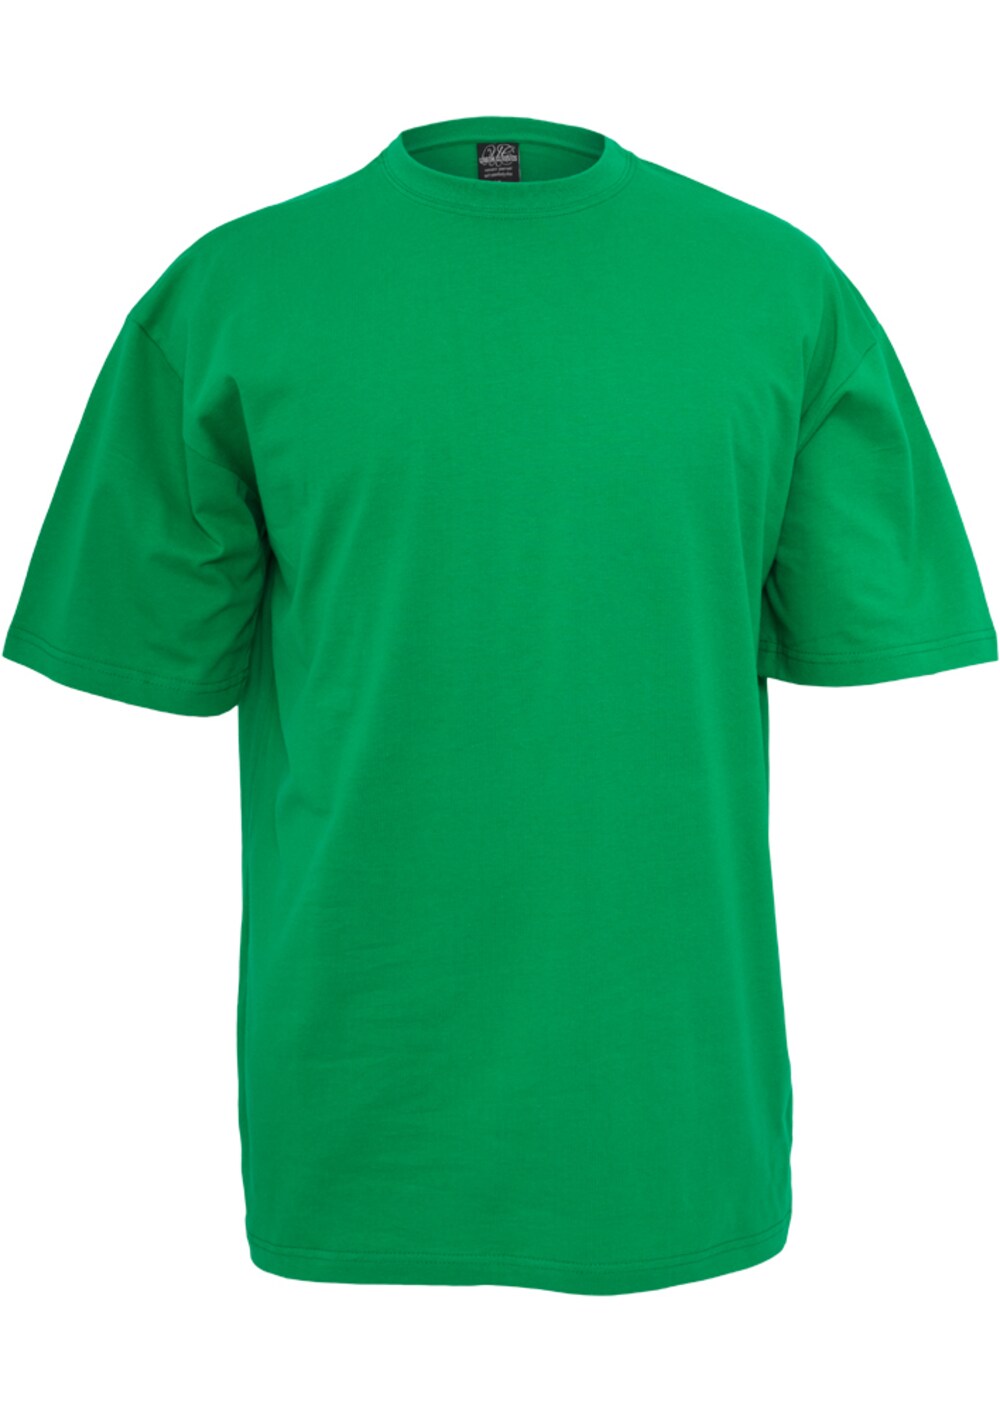 Crew Urban Classic футболка. Classic Green.